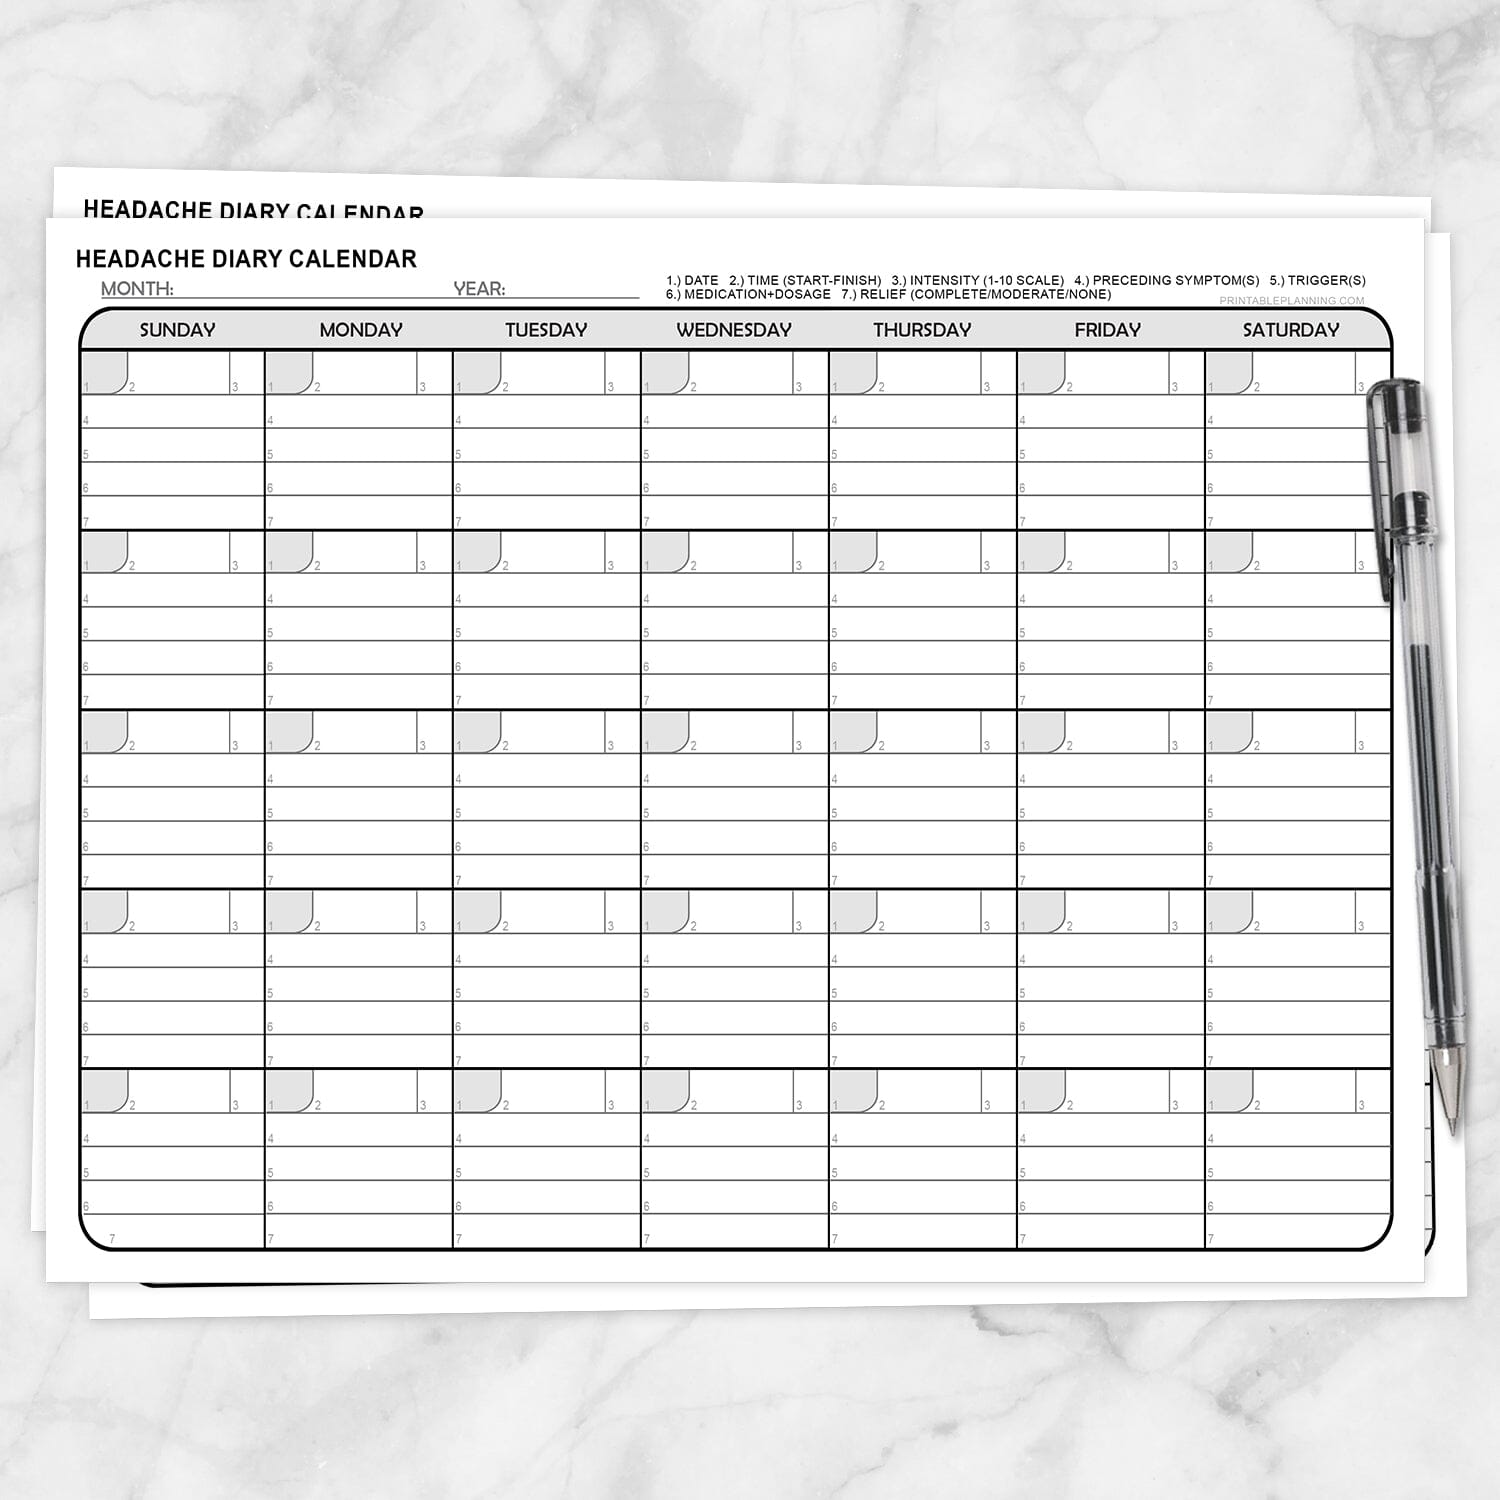 Printable Headache Diary Calendar at Printable Planning.